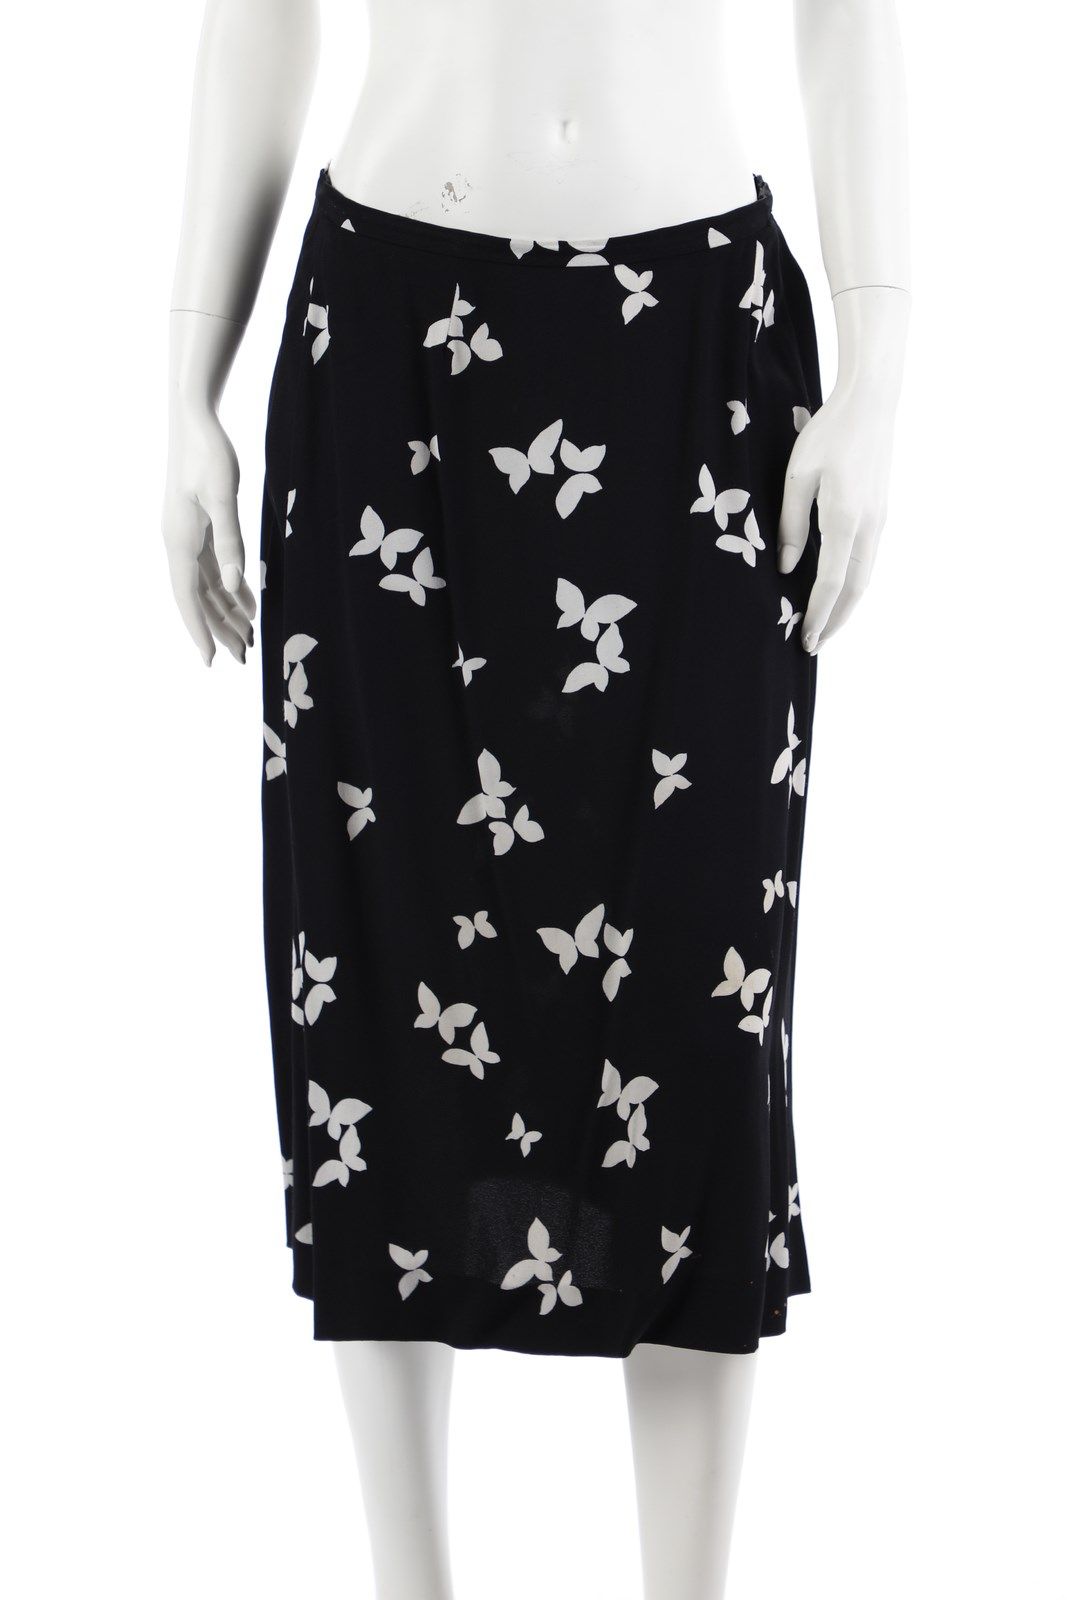 SAINT LAURENT Silk skirt, black background with white butterflies. 80's. Size 44&hellip;